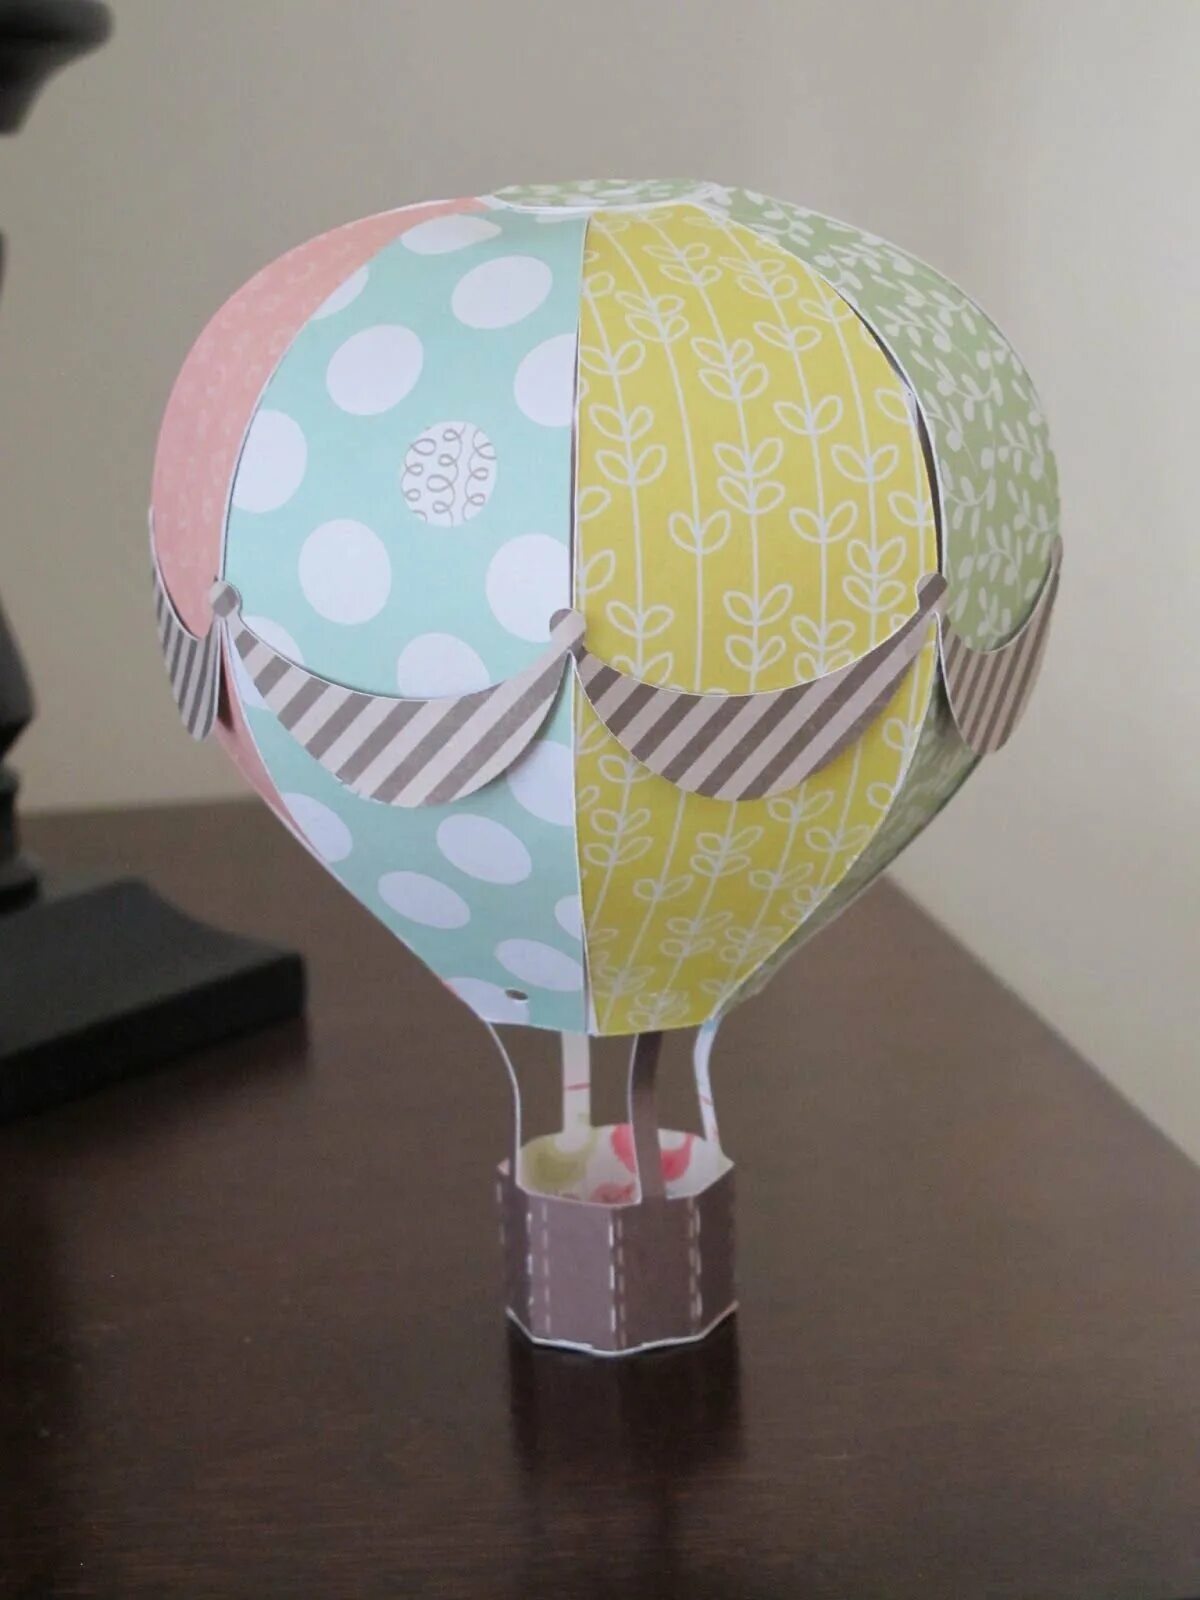 Мастер класс воздушный шар. Воздушный шар поделка. Поделка воздушный шар из бумаги. Объемный воздушный шар. Поделка воздушный шар с корзиной.